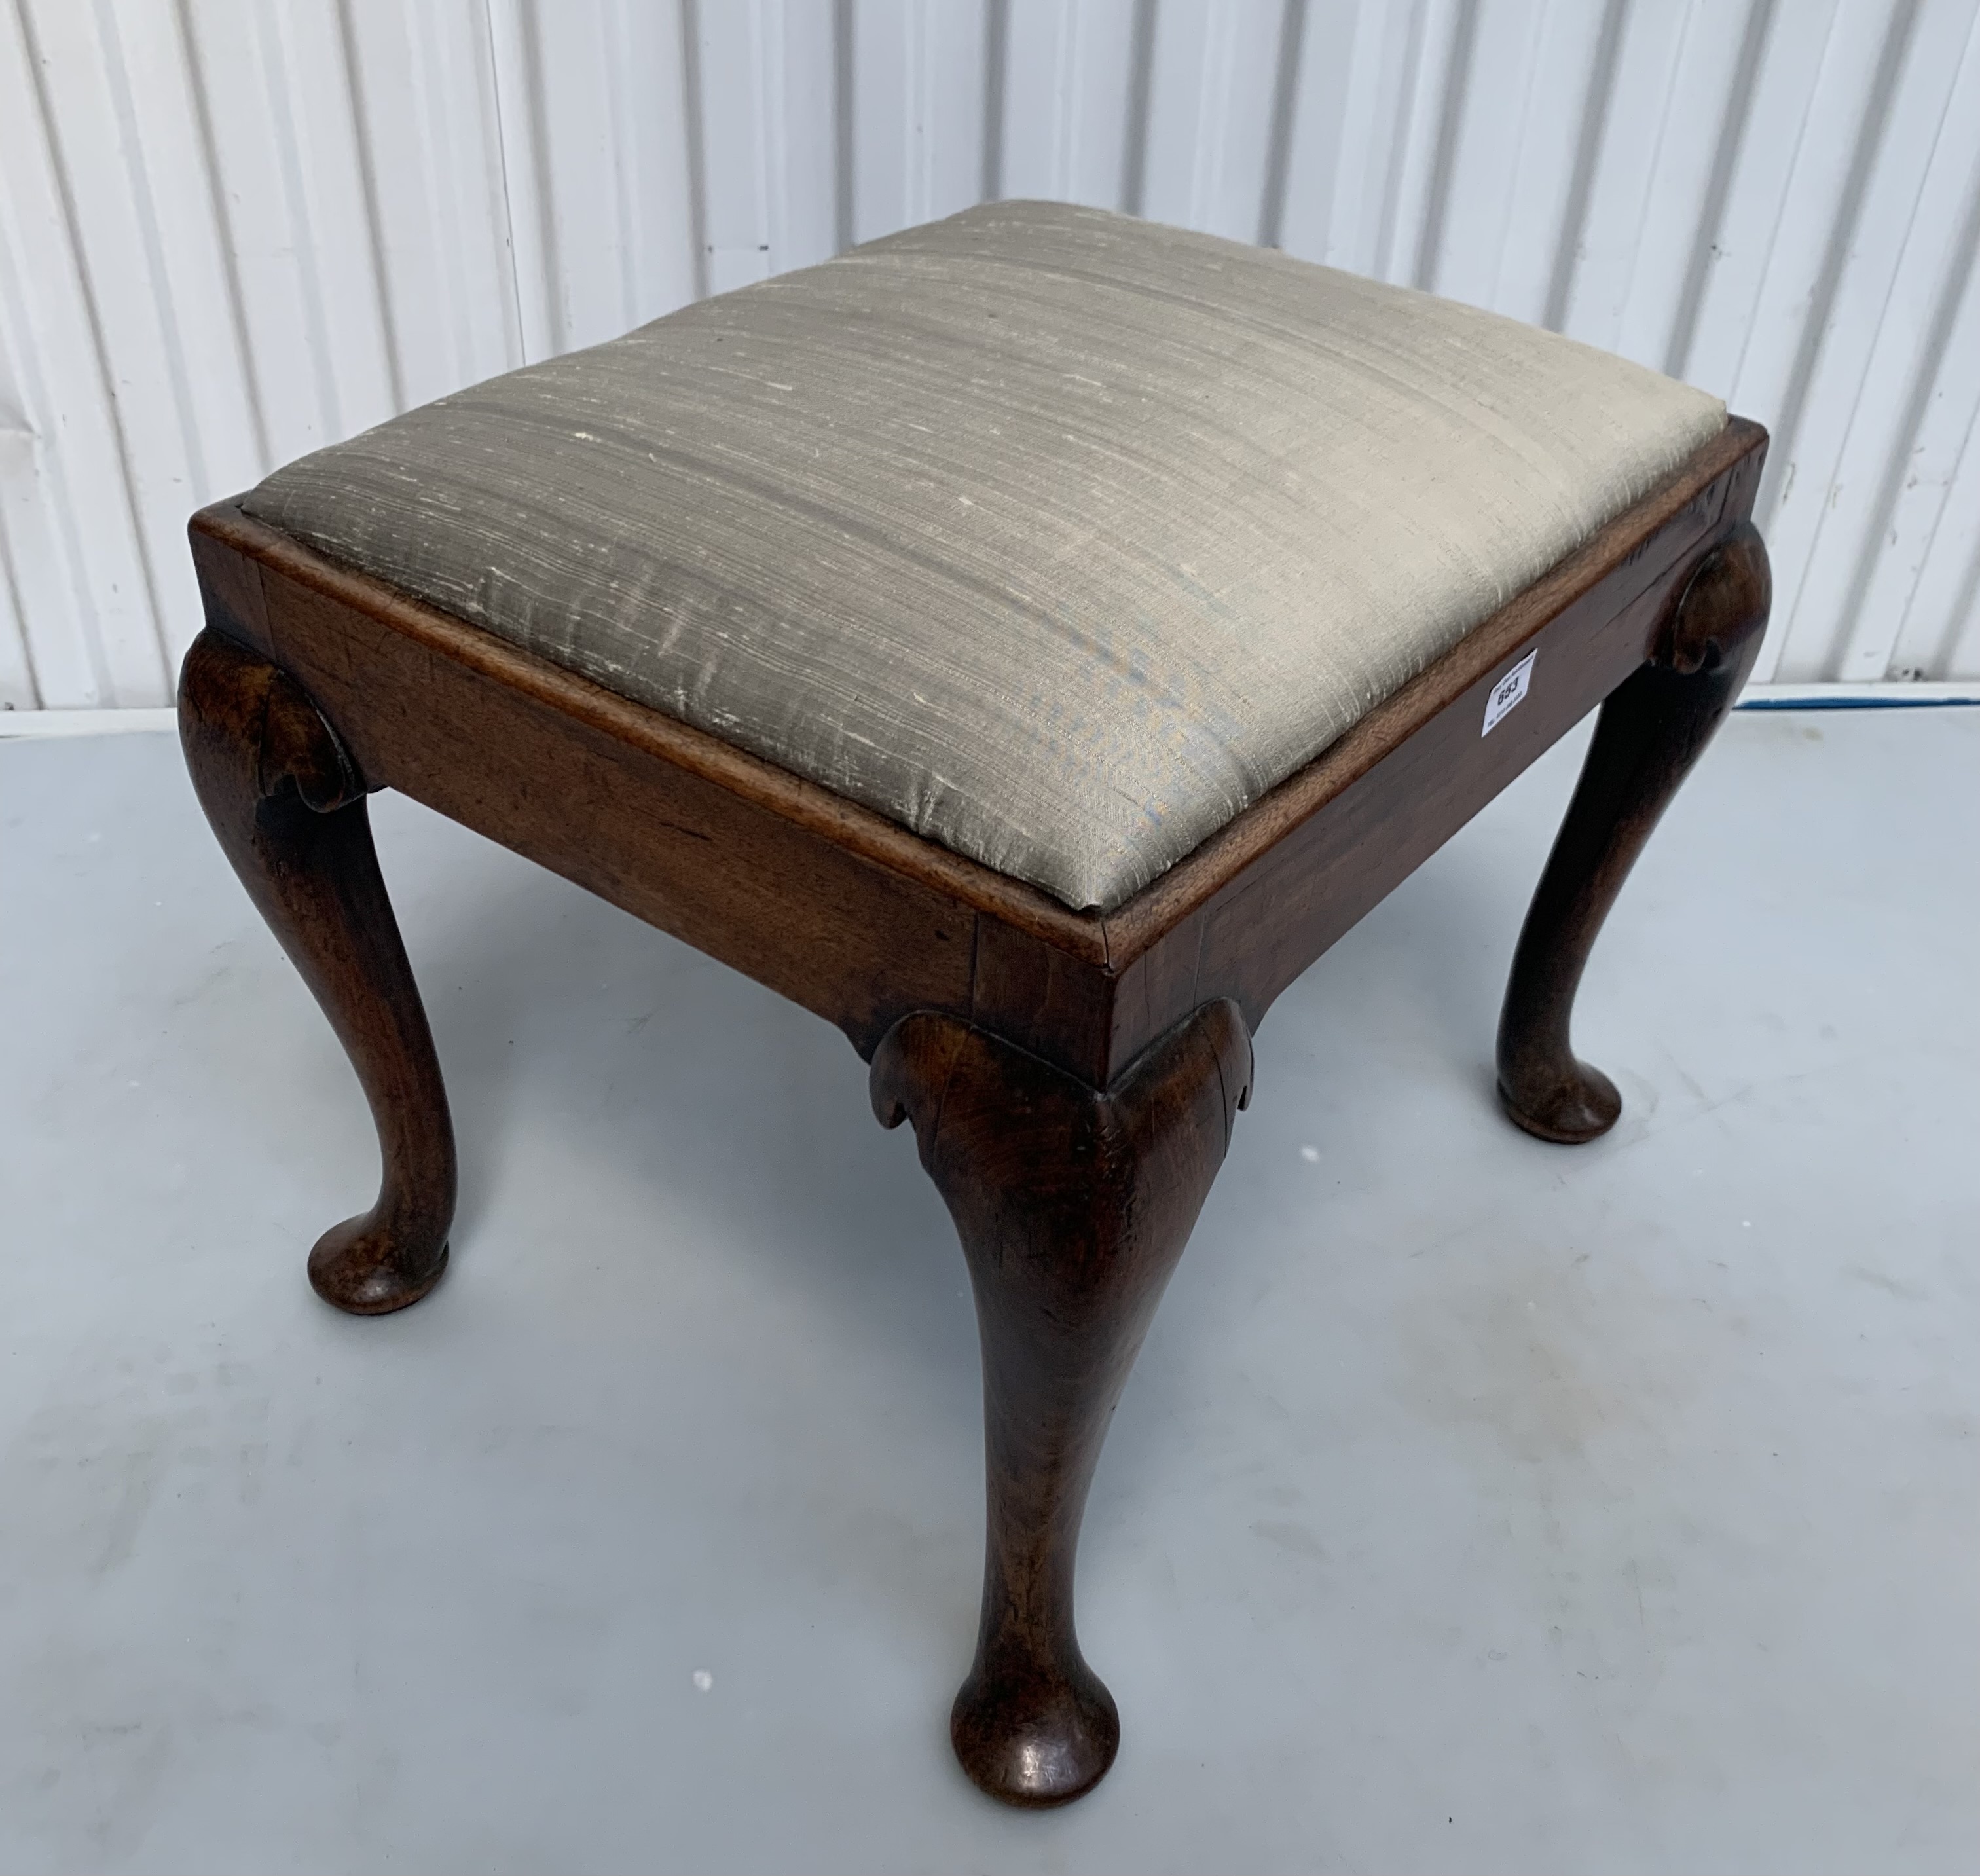 George IV dressing table stool - Image 3 of 6